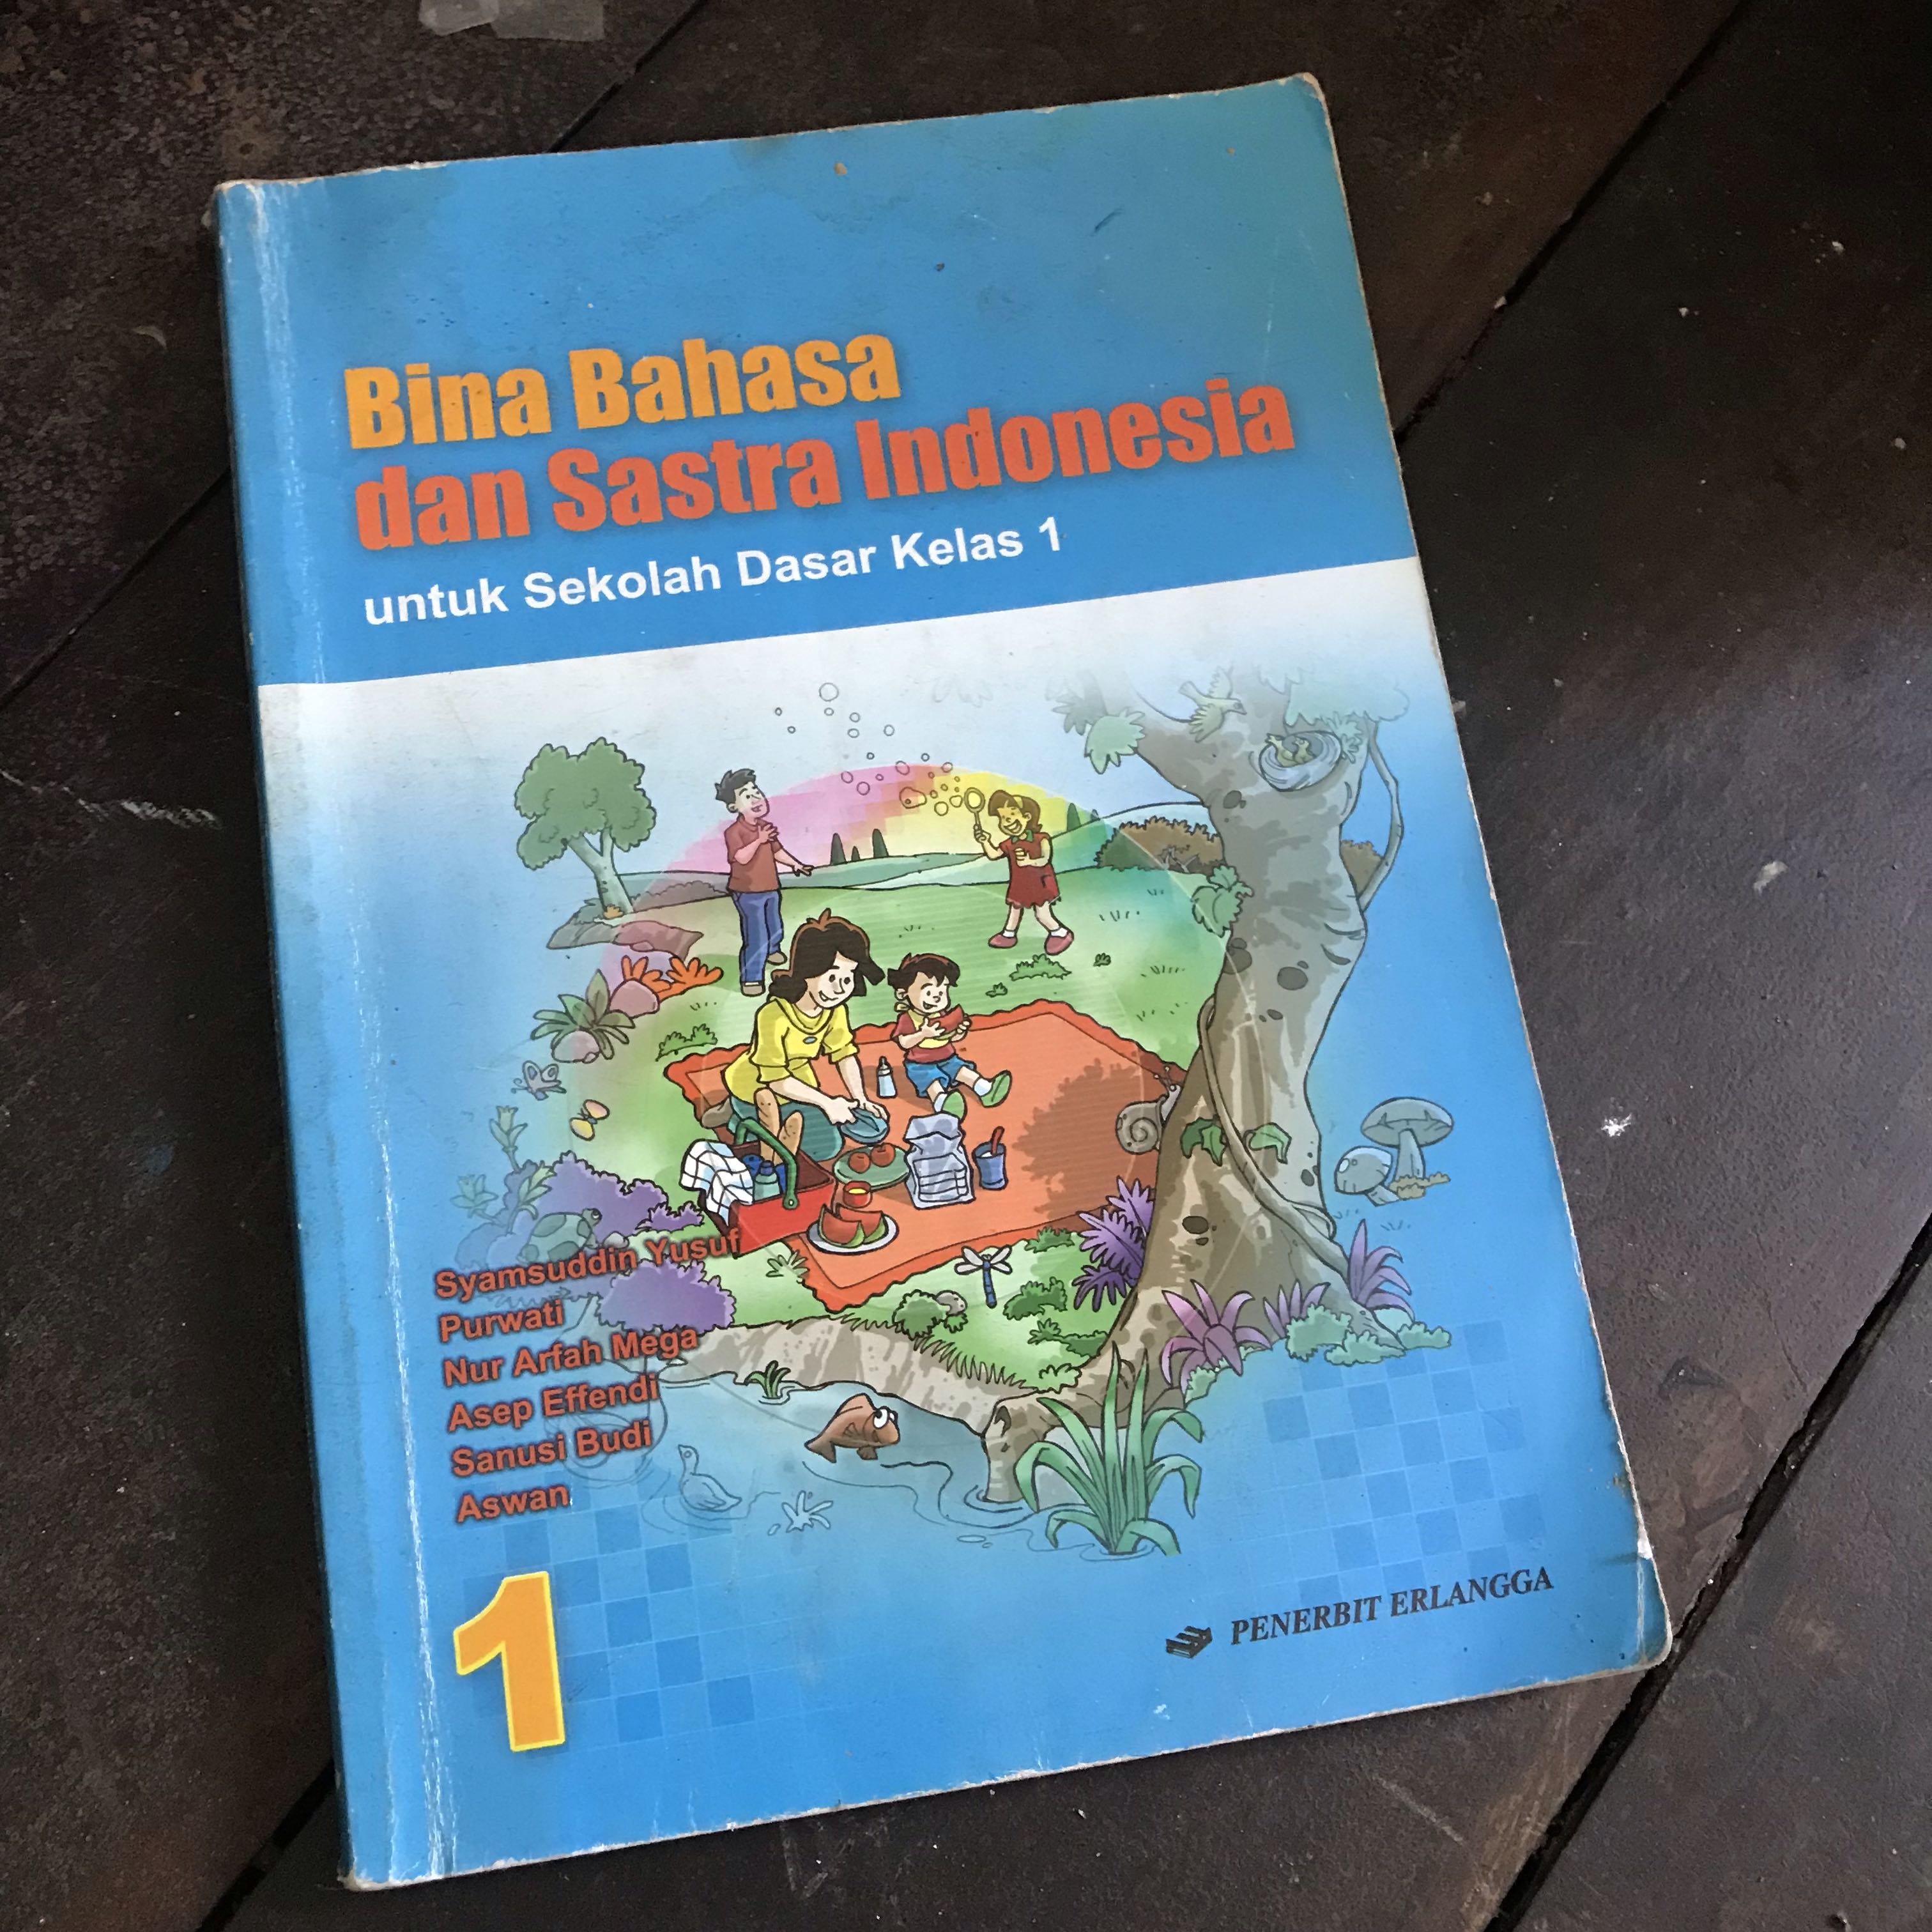 Mauvivo Bina Bahasa dan Sastra Indonesia SD Kelas 1 Books & Stationery Textbooks on Carousell